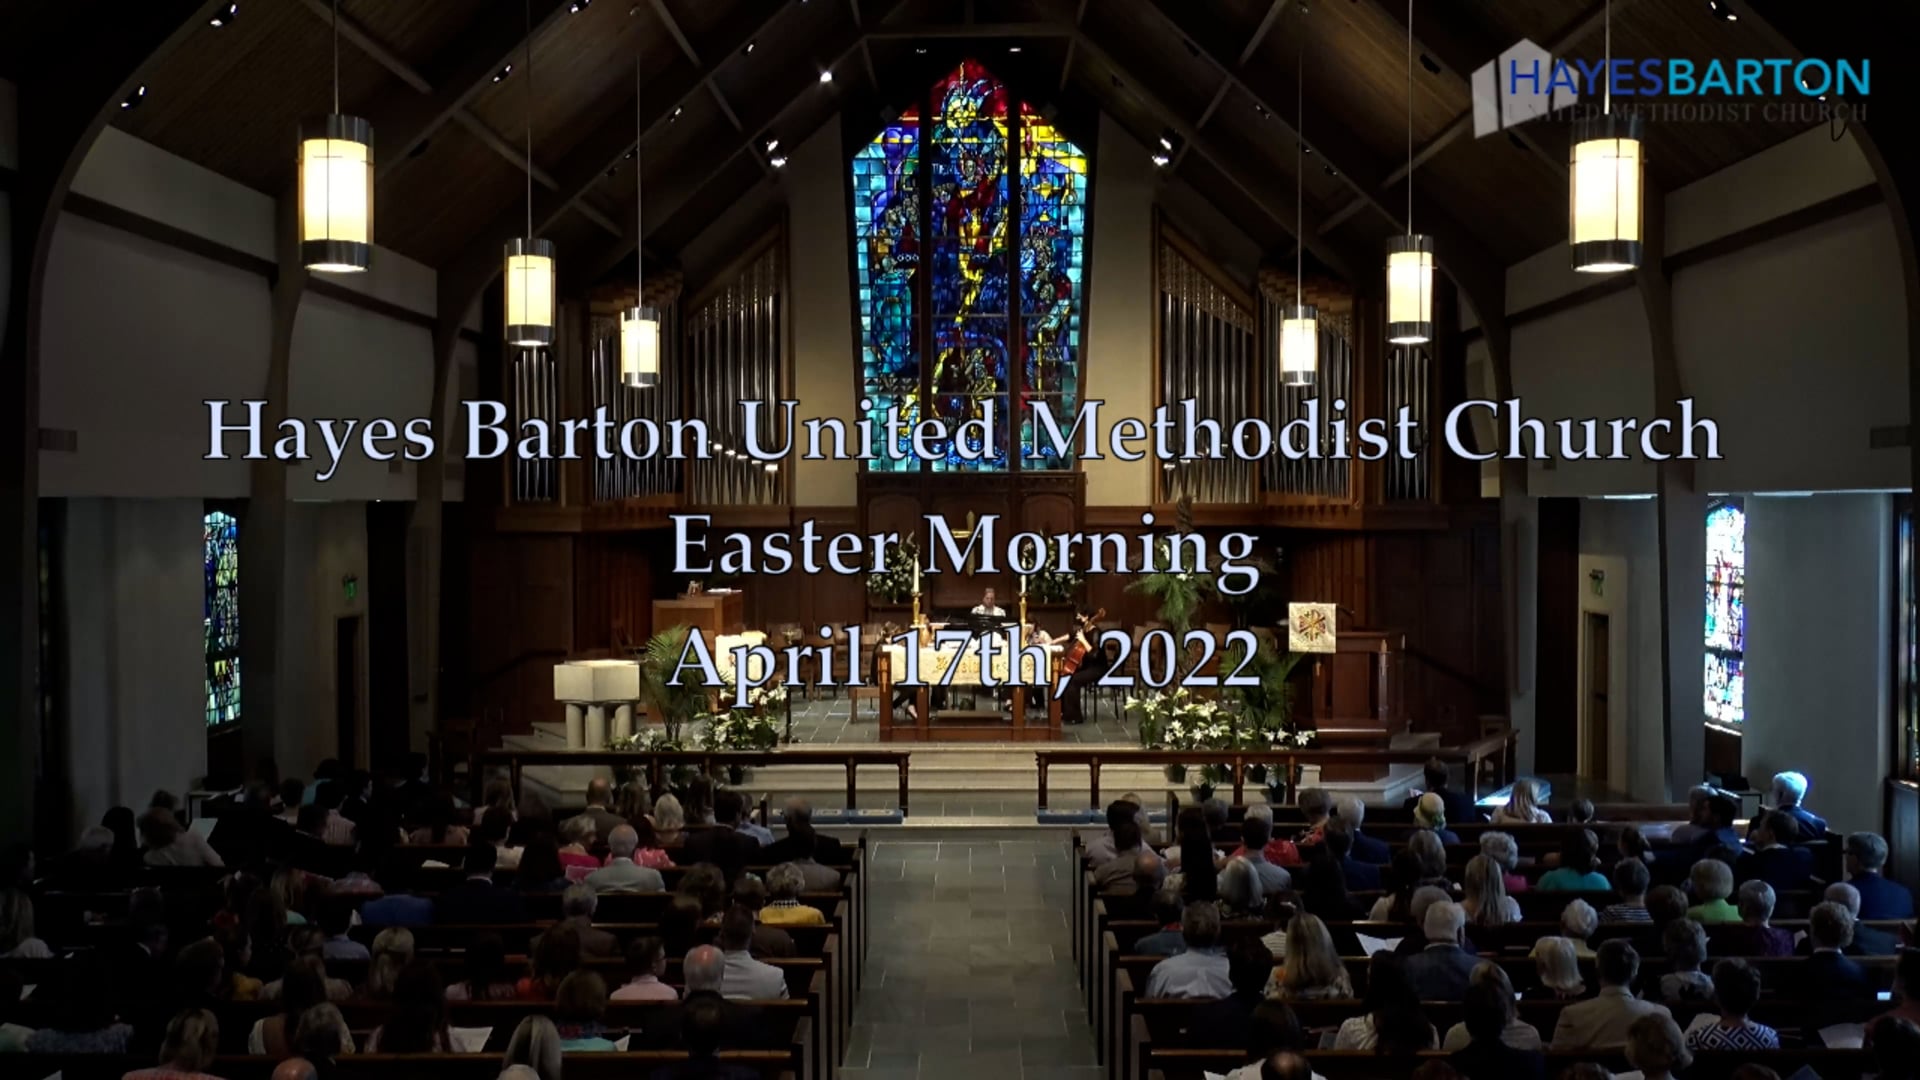 Easter 11am Service - April 17, 2022